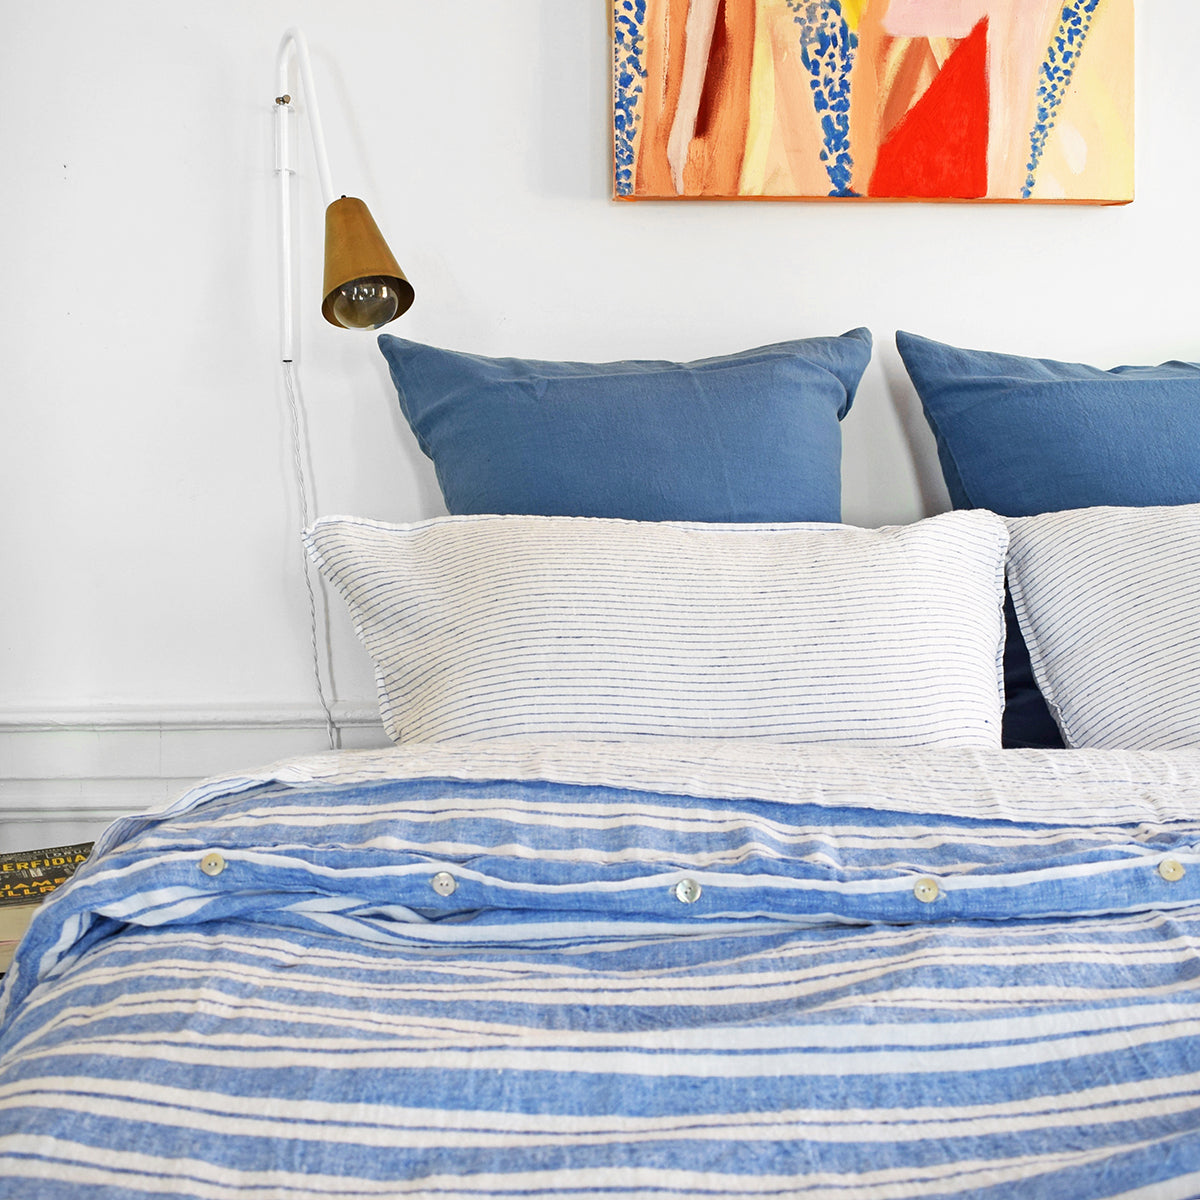 Linge Particulier Atlantic Blue Euro Linen Pillowcase Sham with a blue stripe linen duvet for a colorful linen bedding look in electric blue - Collyer's Mansion